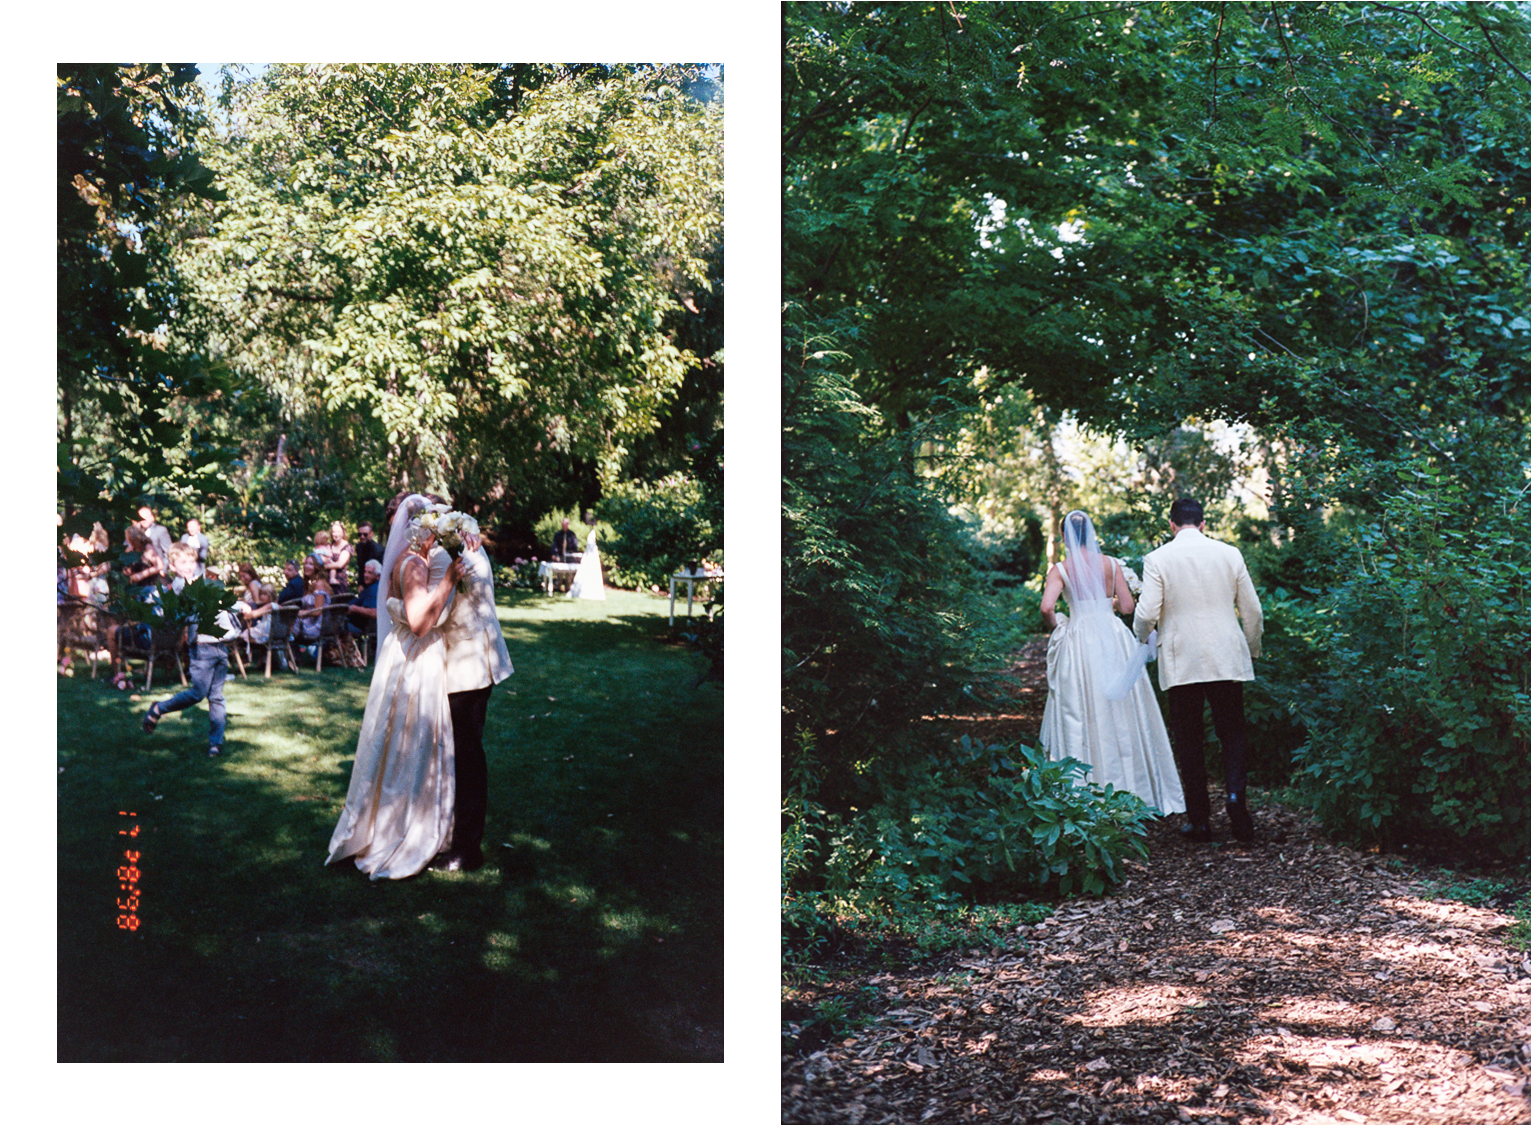 Linden-Gardens-Wedding-Venue-Okanagan-Penticton-Photography-Film-Analog-15.PNG